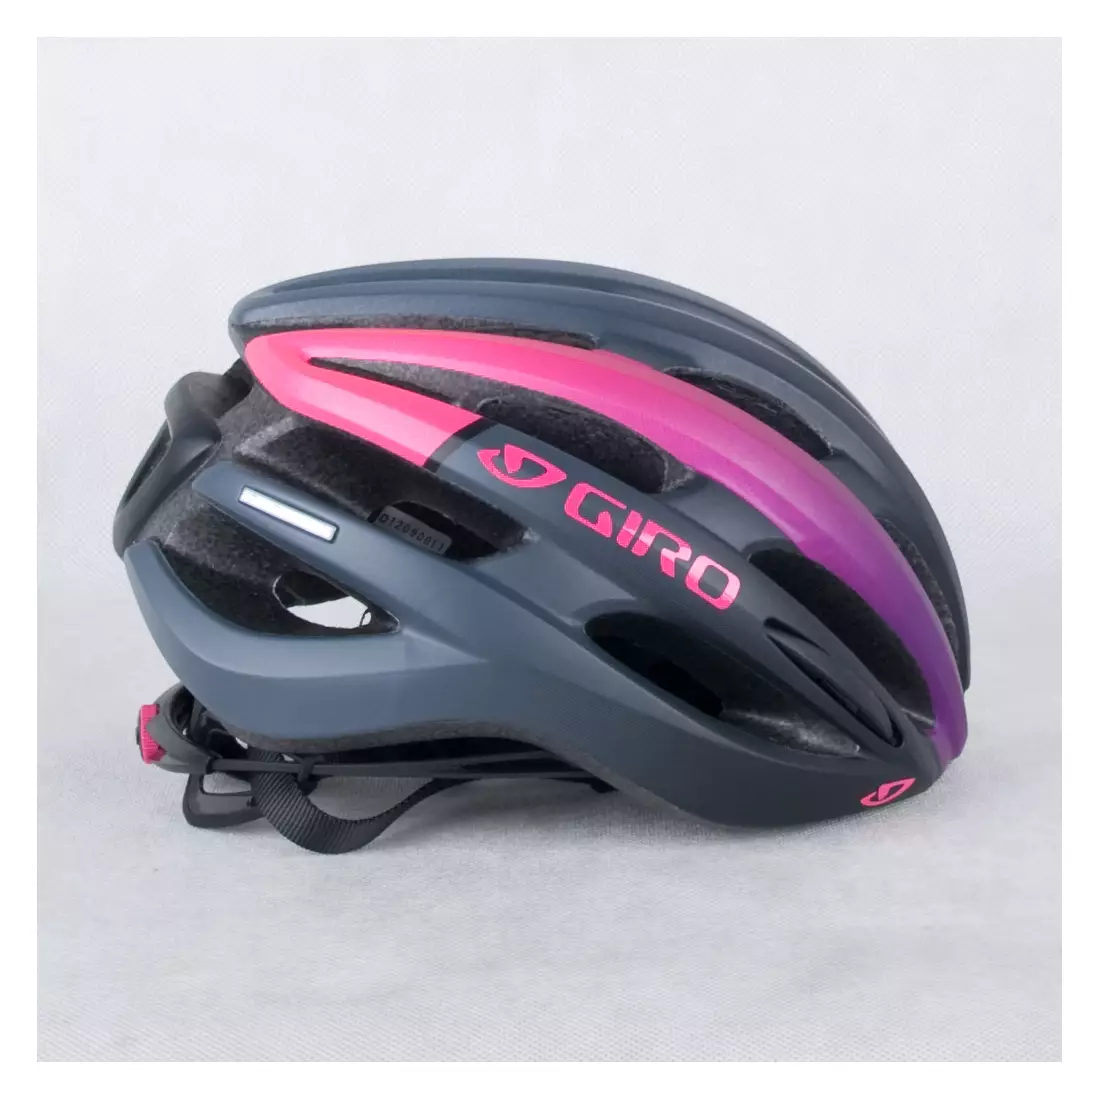 GIRO SAGA - women's bicycle helmet, black and pink